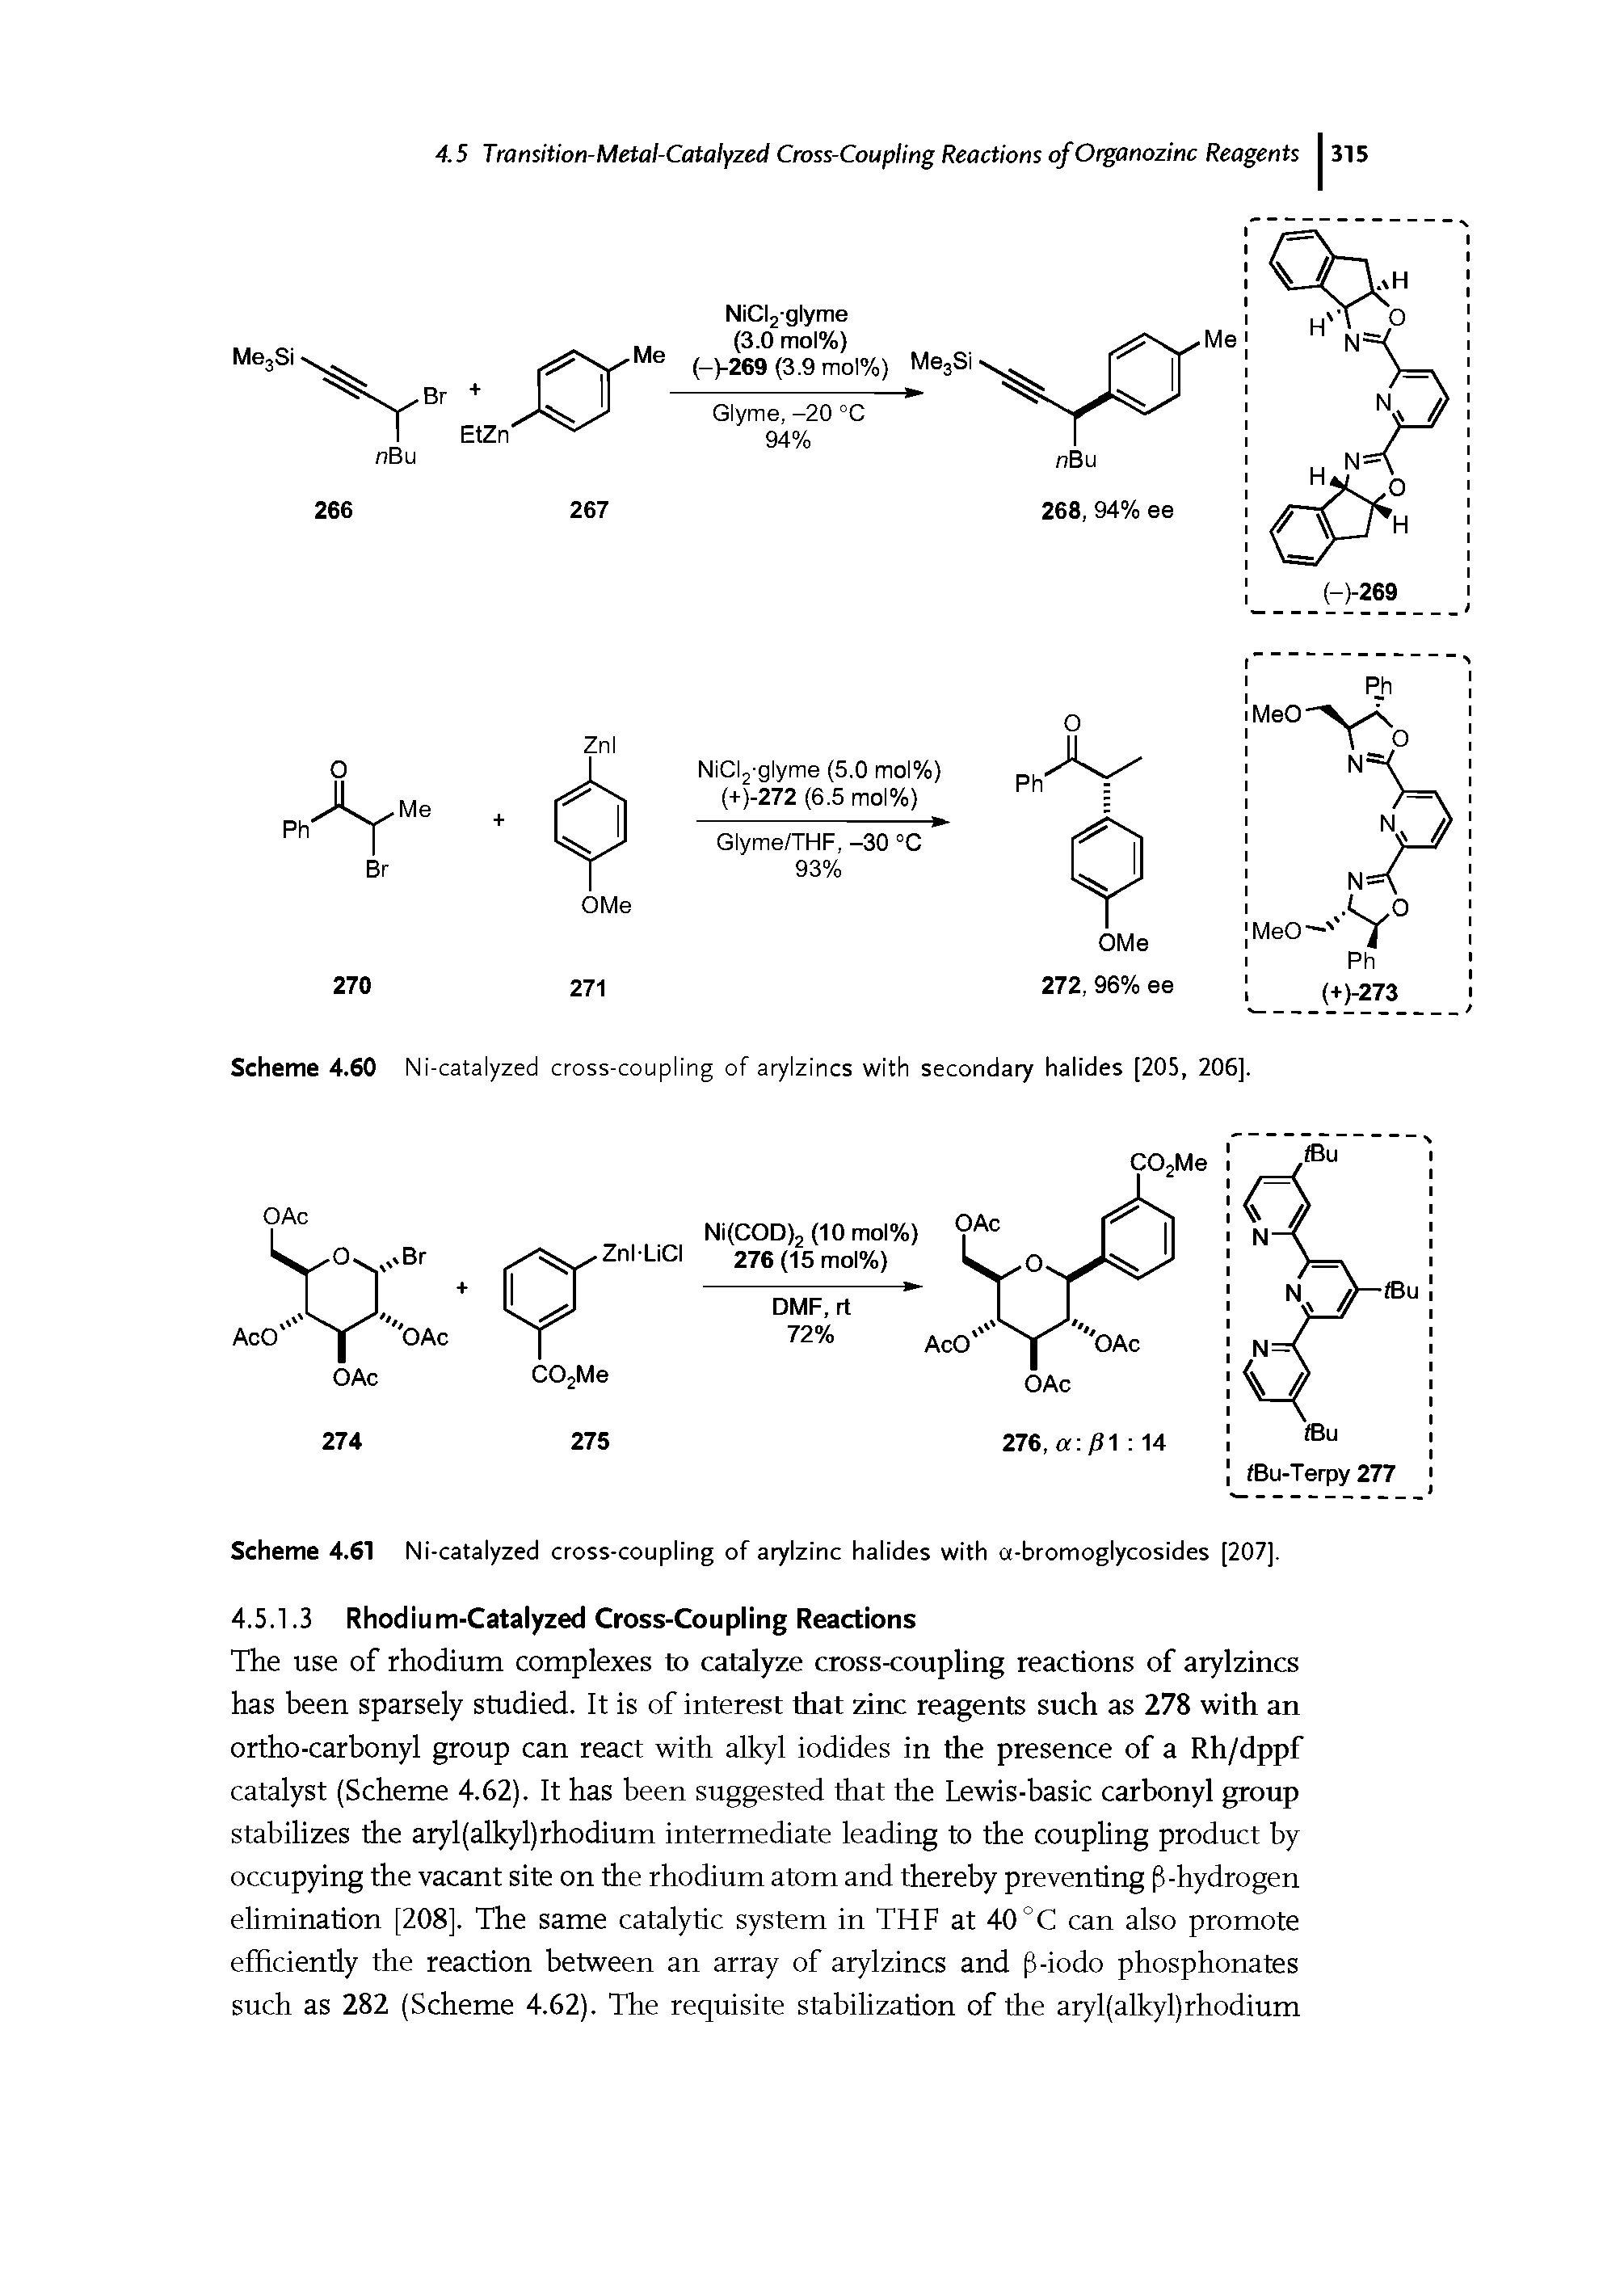 Scheme 4.61 Ni-catalyzed cross-coupling of arylzinc halides with a-bromoglycosides [207]. 4.5.1.3 Rhodium-Catalyzed Cross-Coupling Reactions...